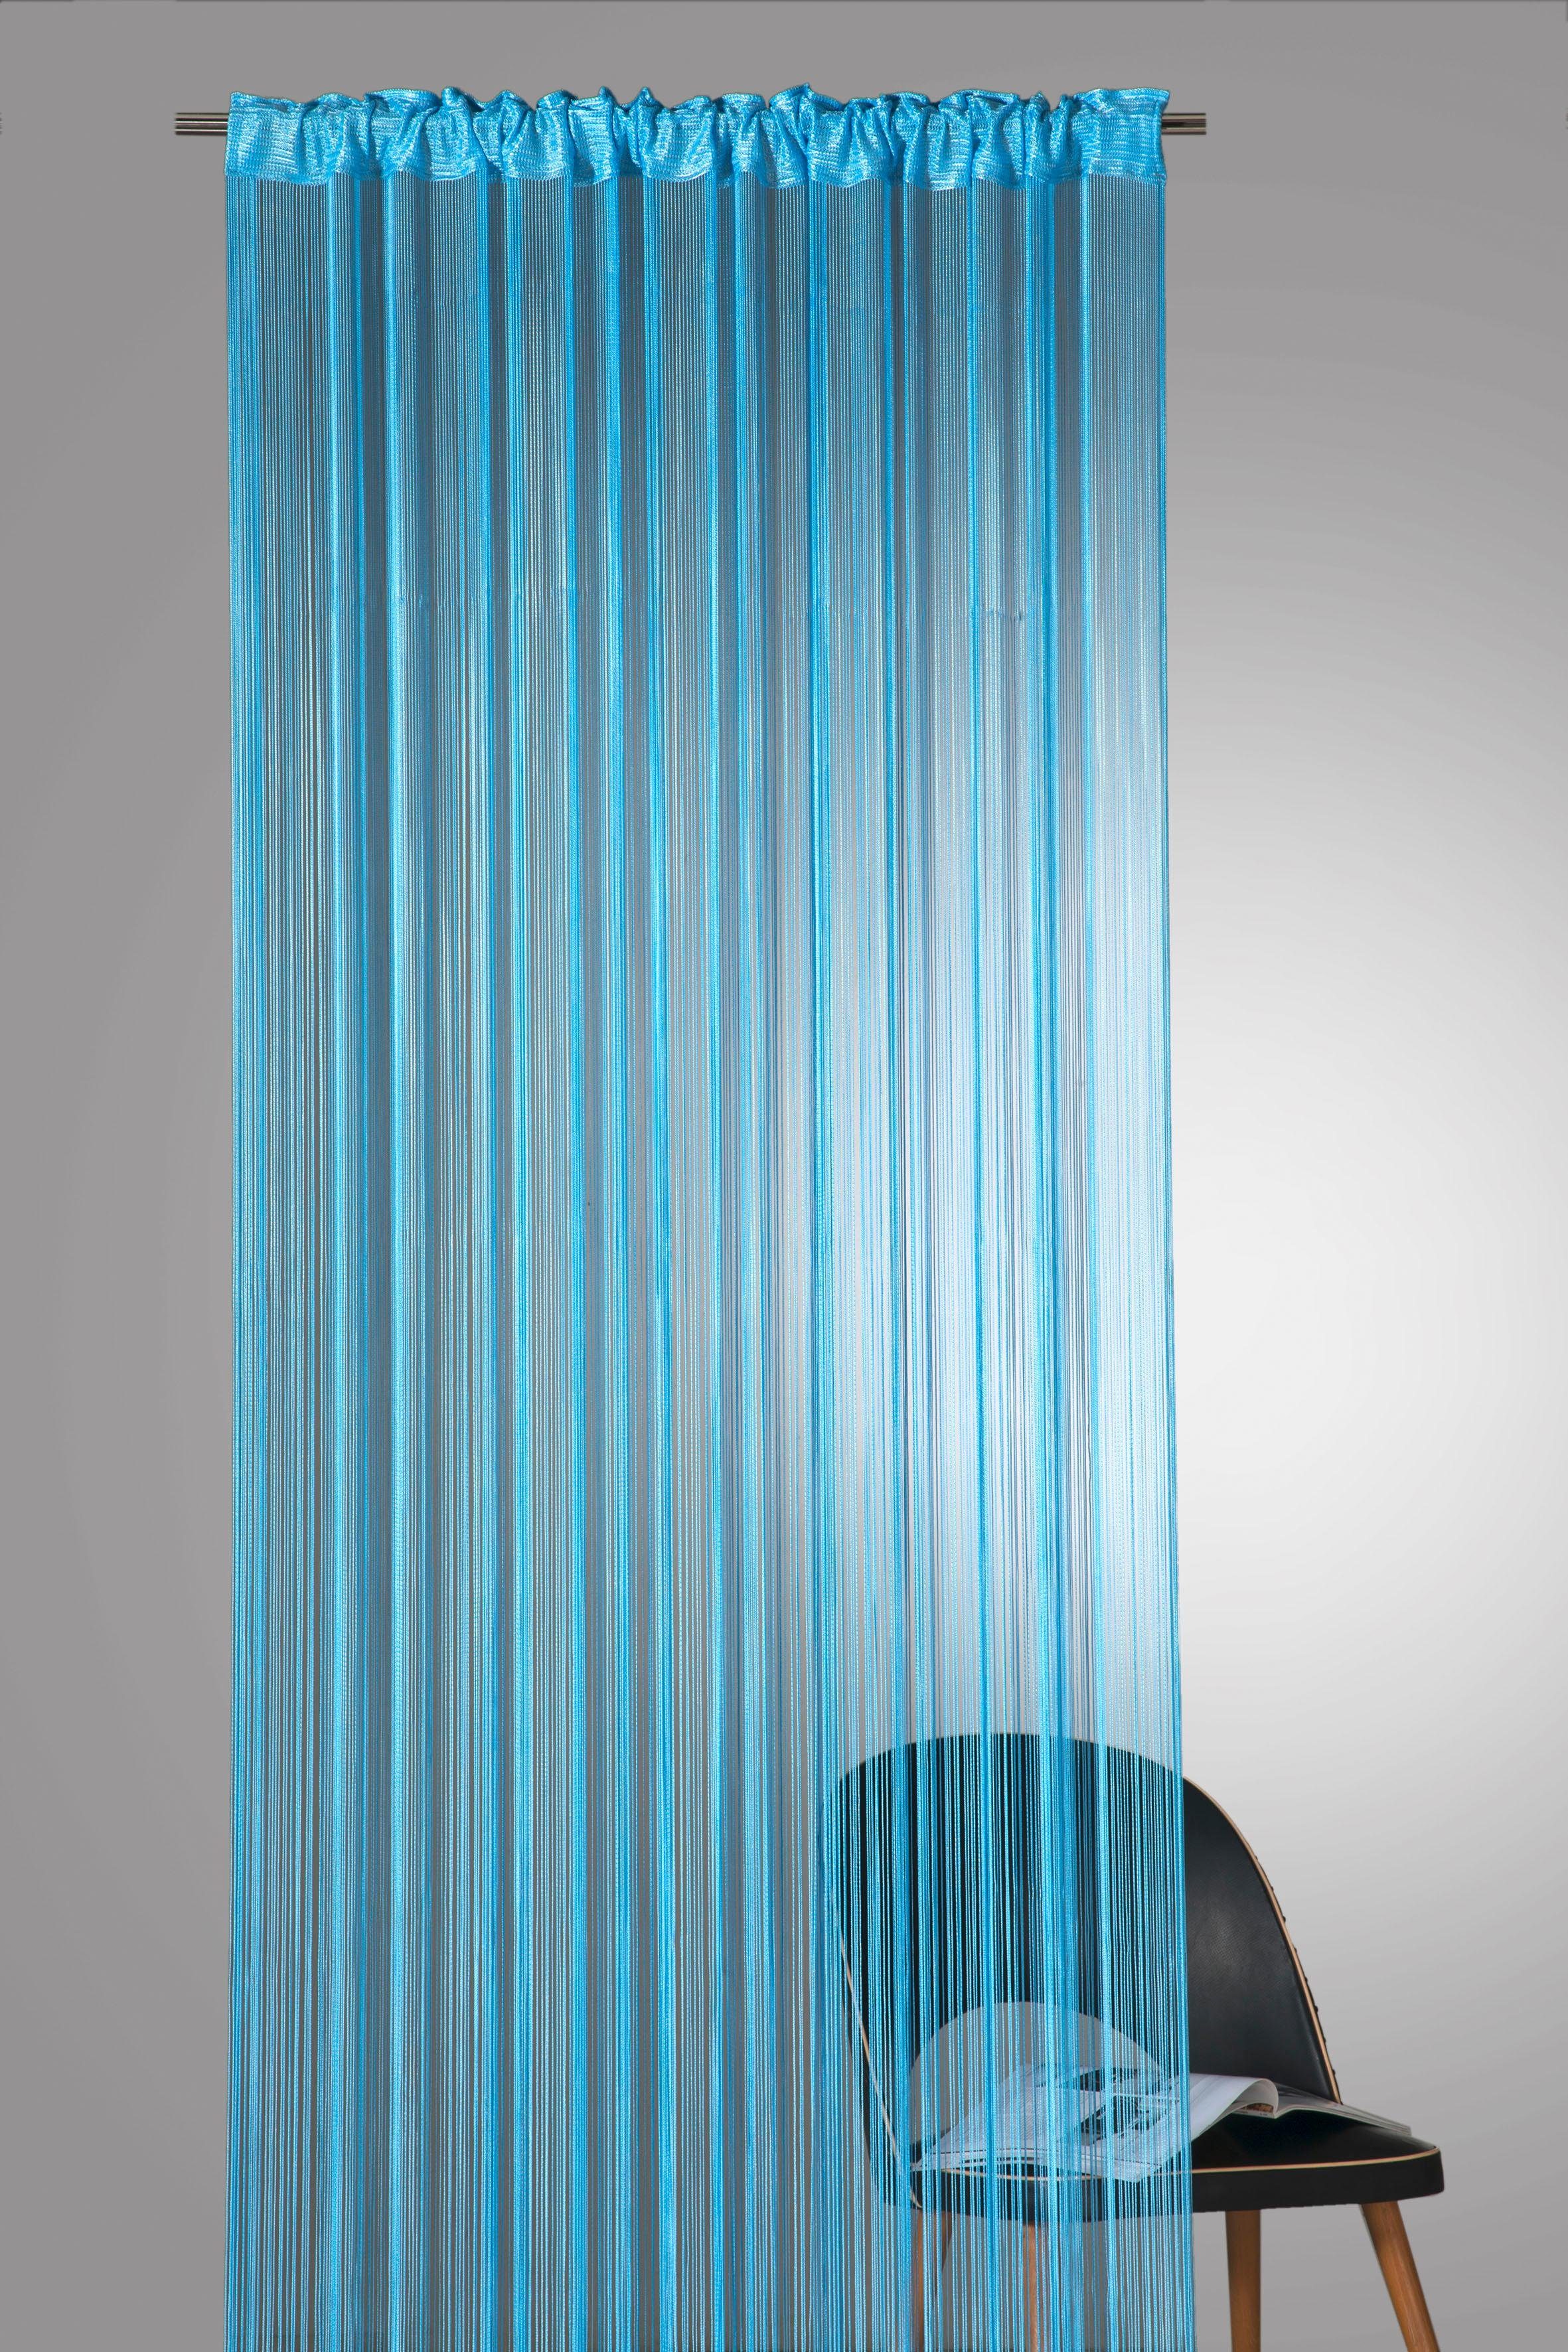 Fadenvorhang Rebecca, Weckbrodt, (1 Gardine, halbtransparent, Fadengardine, blau/uni transparent, kürzbar Multifunktionsband St), Insektenschutz